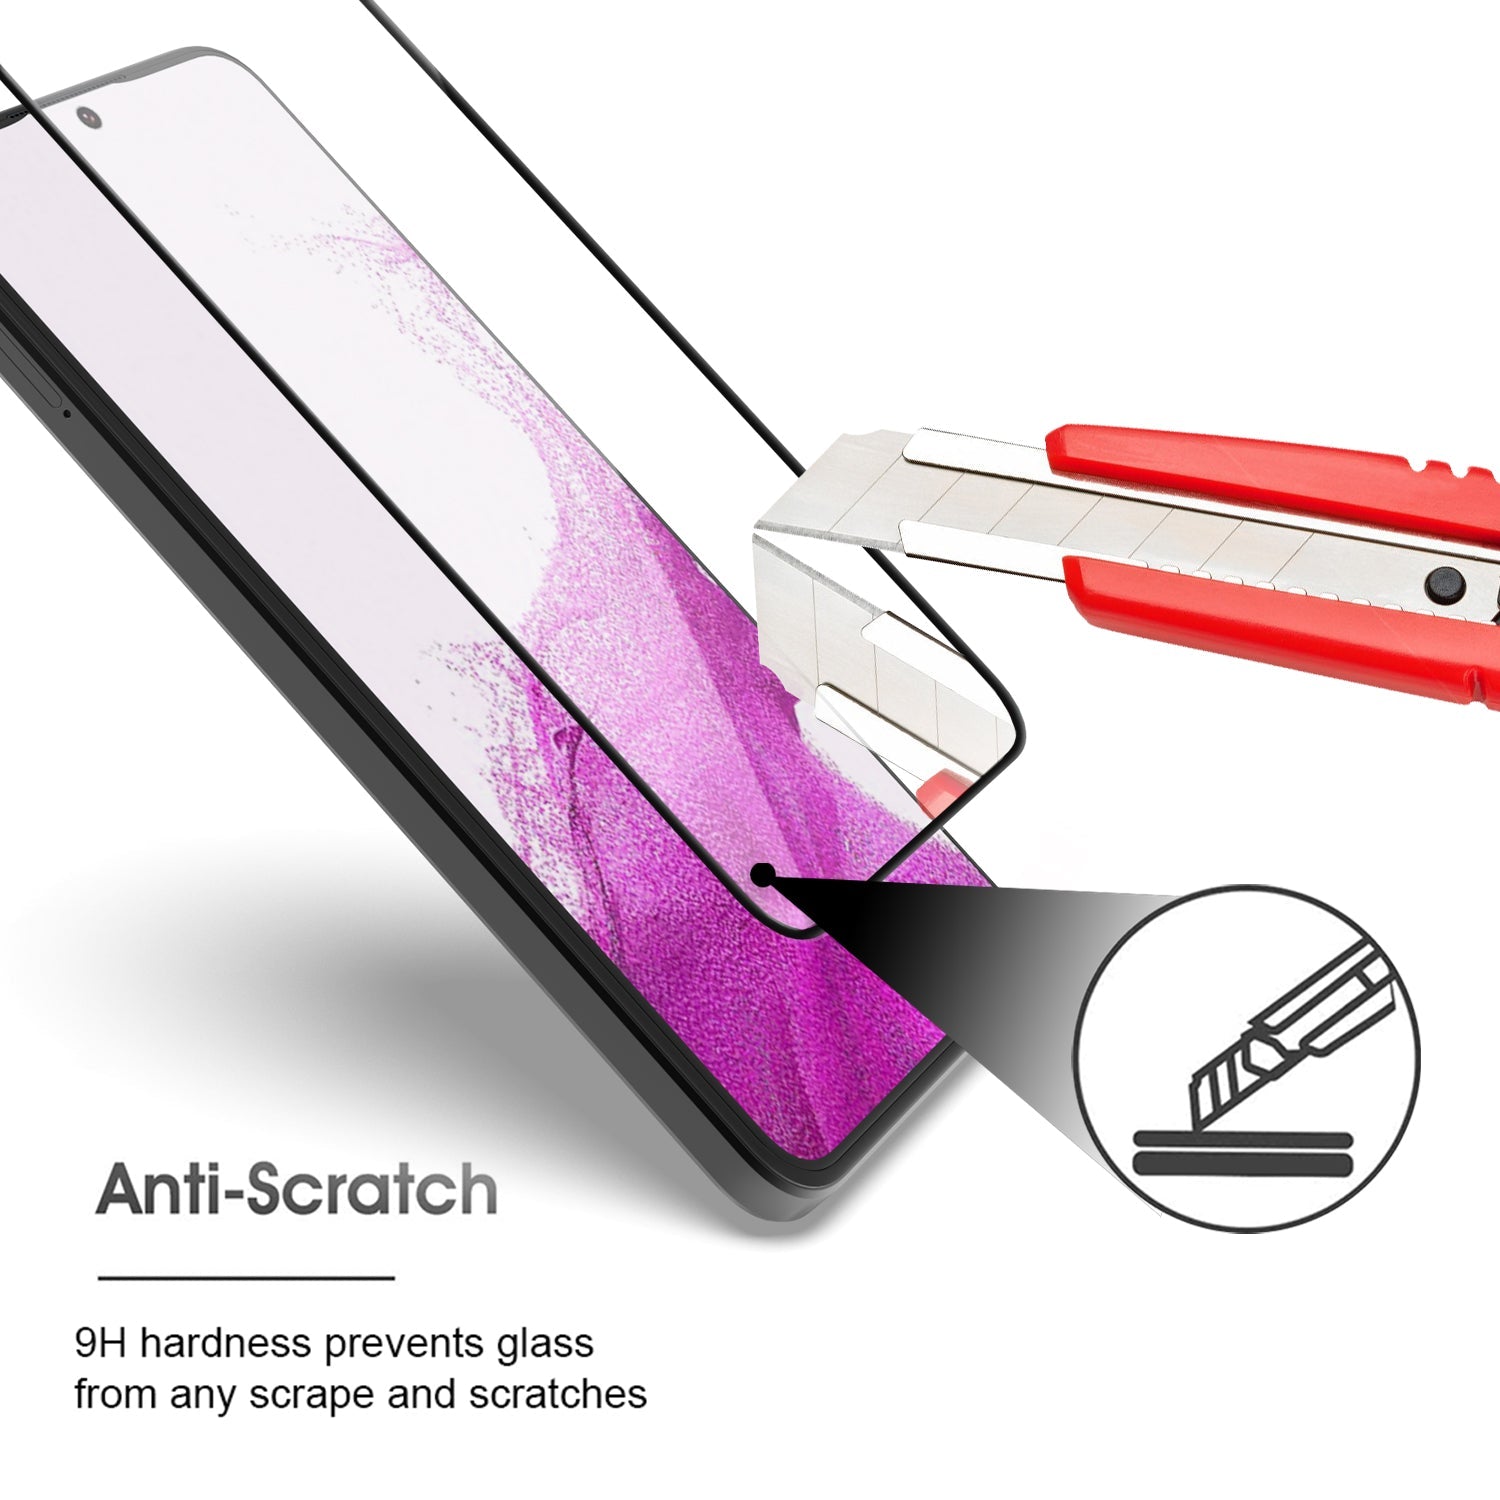 Samsung Galaxy S23+ Plus Case - Slim TPU Silicone Phone Cover Skin